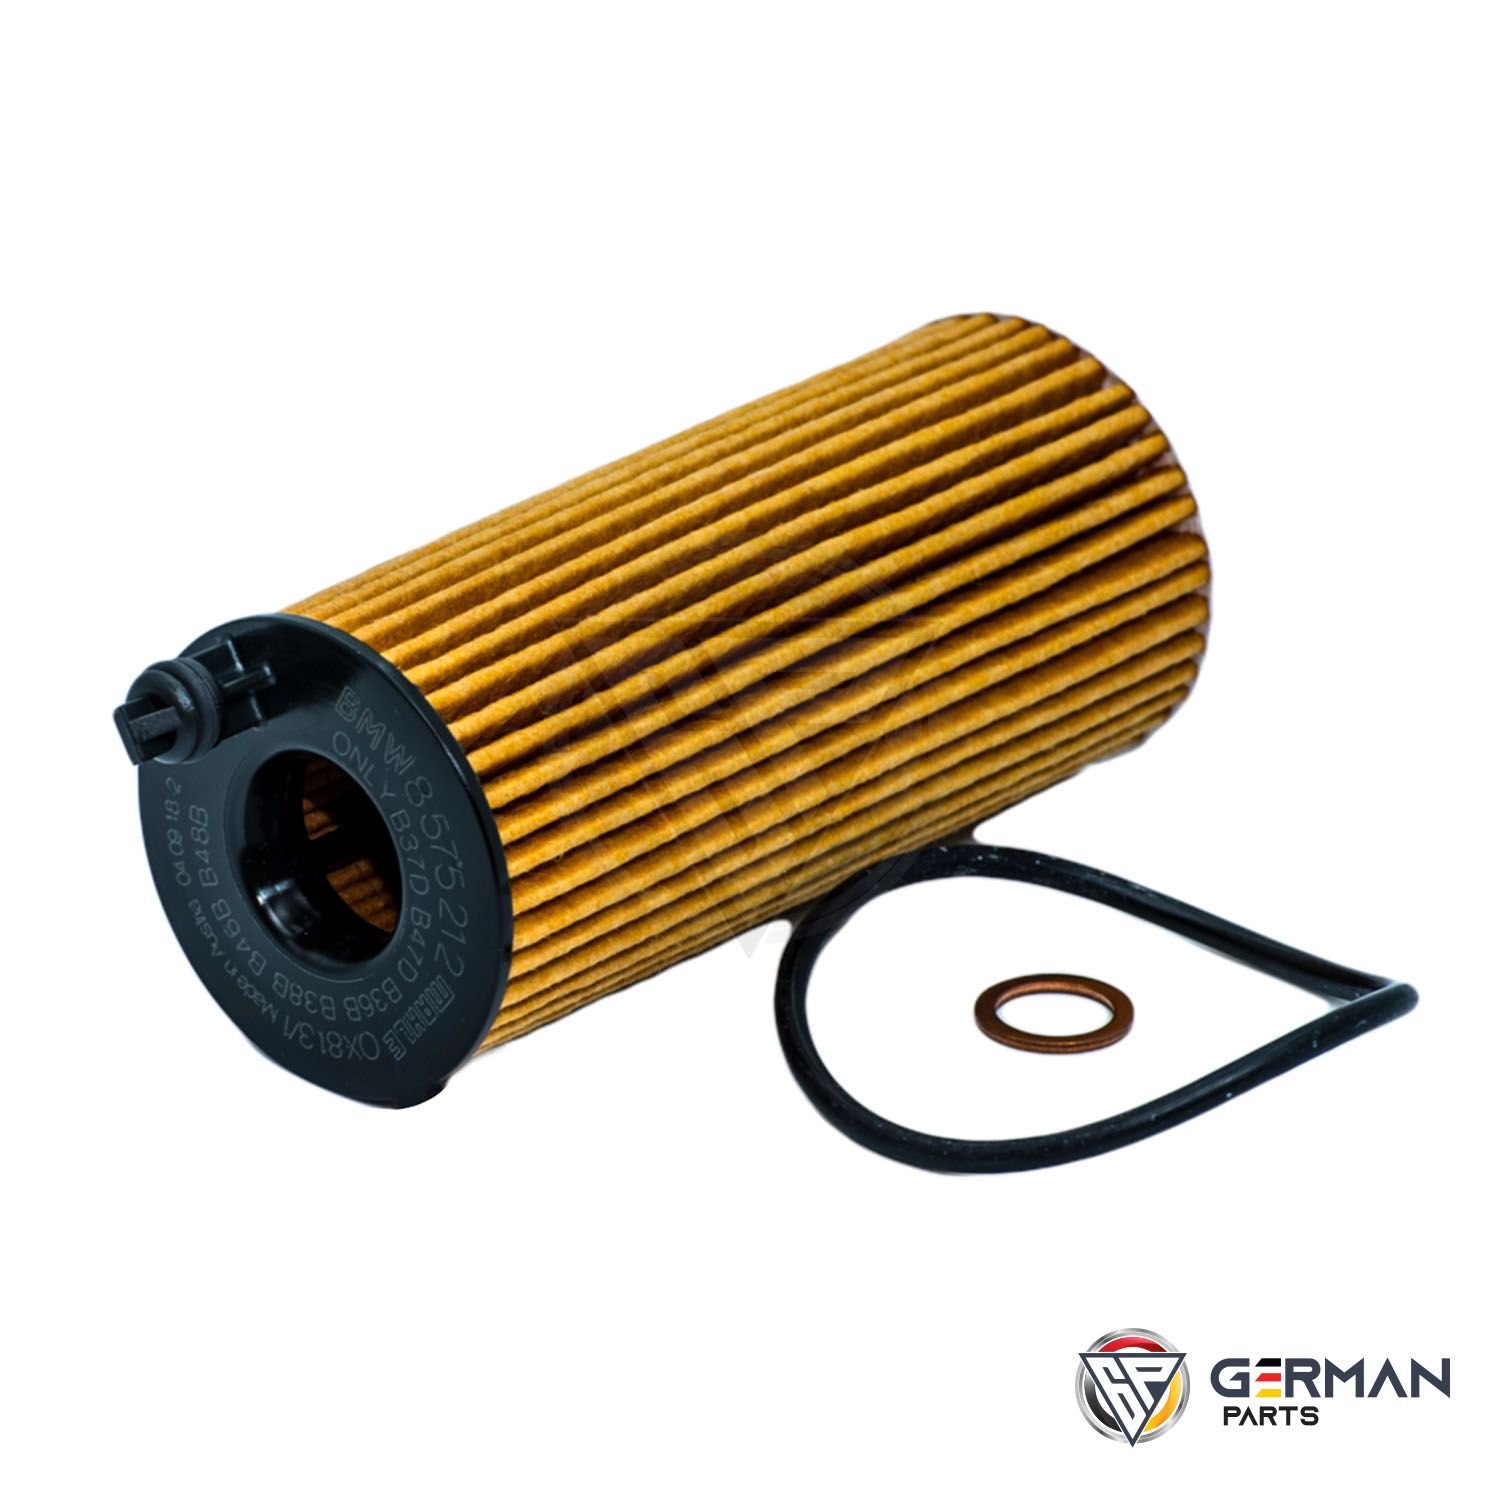 Buy BMW Oil Filter 11428575211 - German Parts